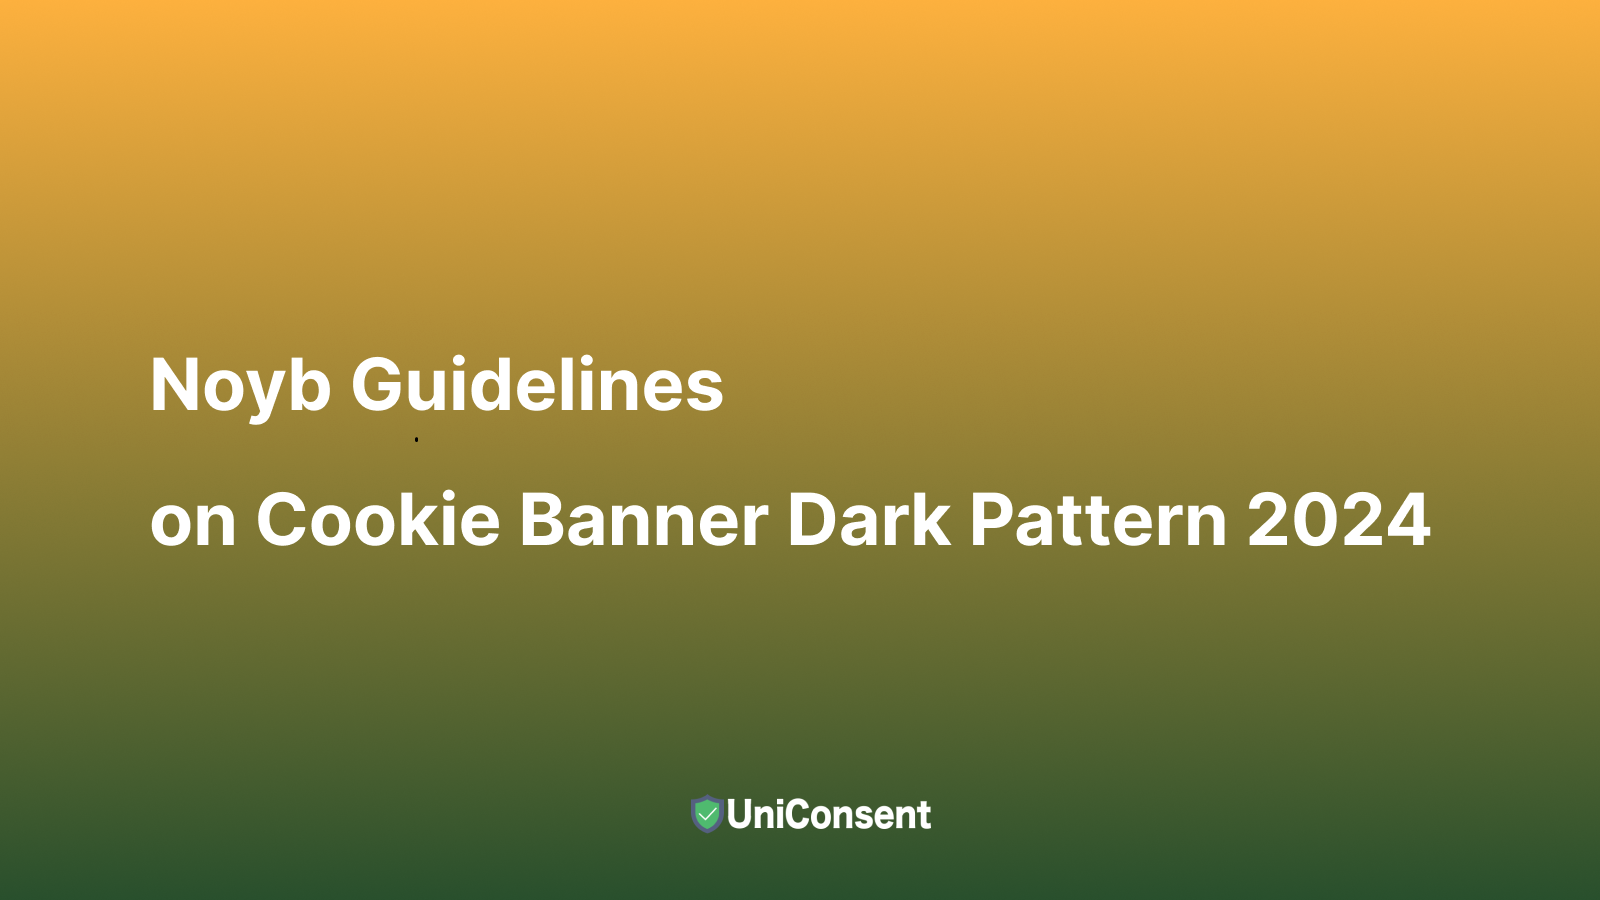 Noyb Guidelines on Cookie Banner Dark Pattern 2024